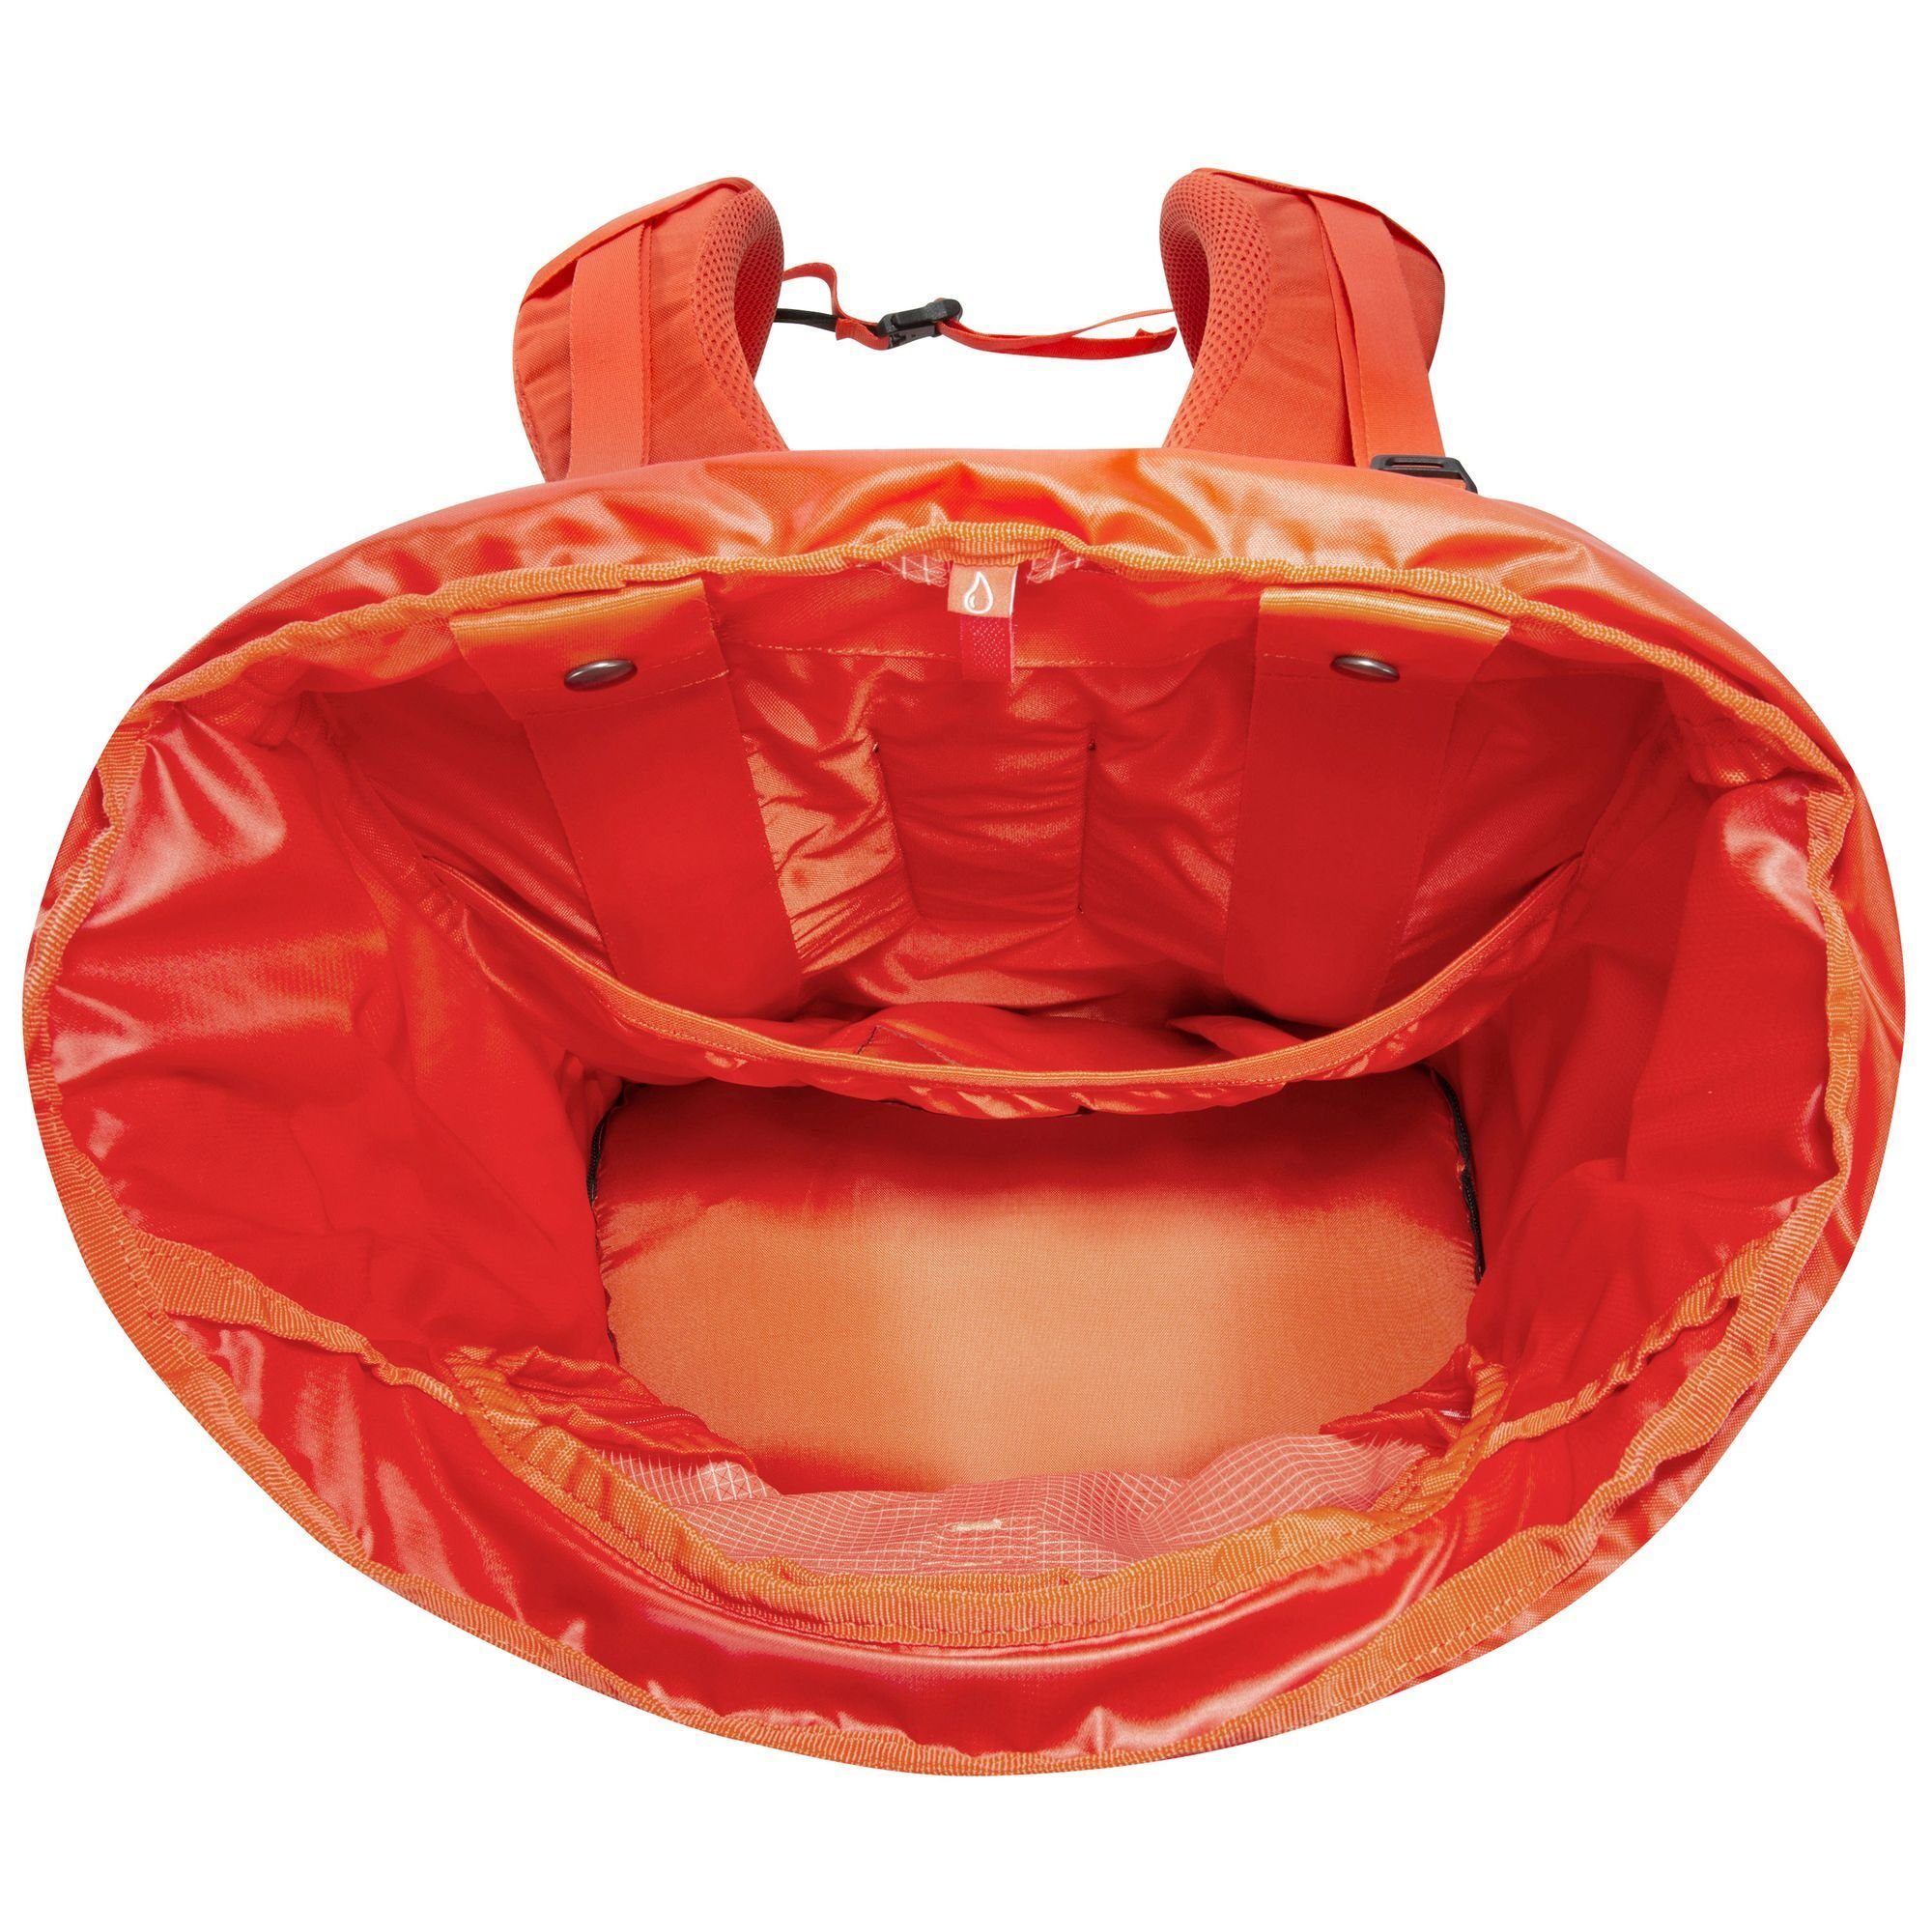 Sportrucksack red Polyamid TATONKA® orange Yukon,